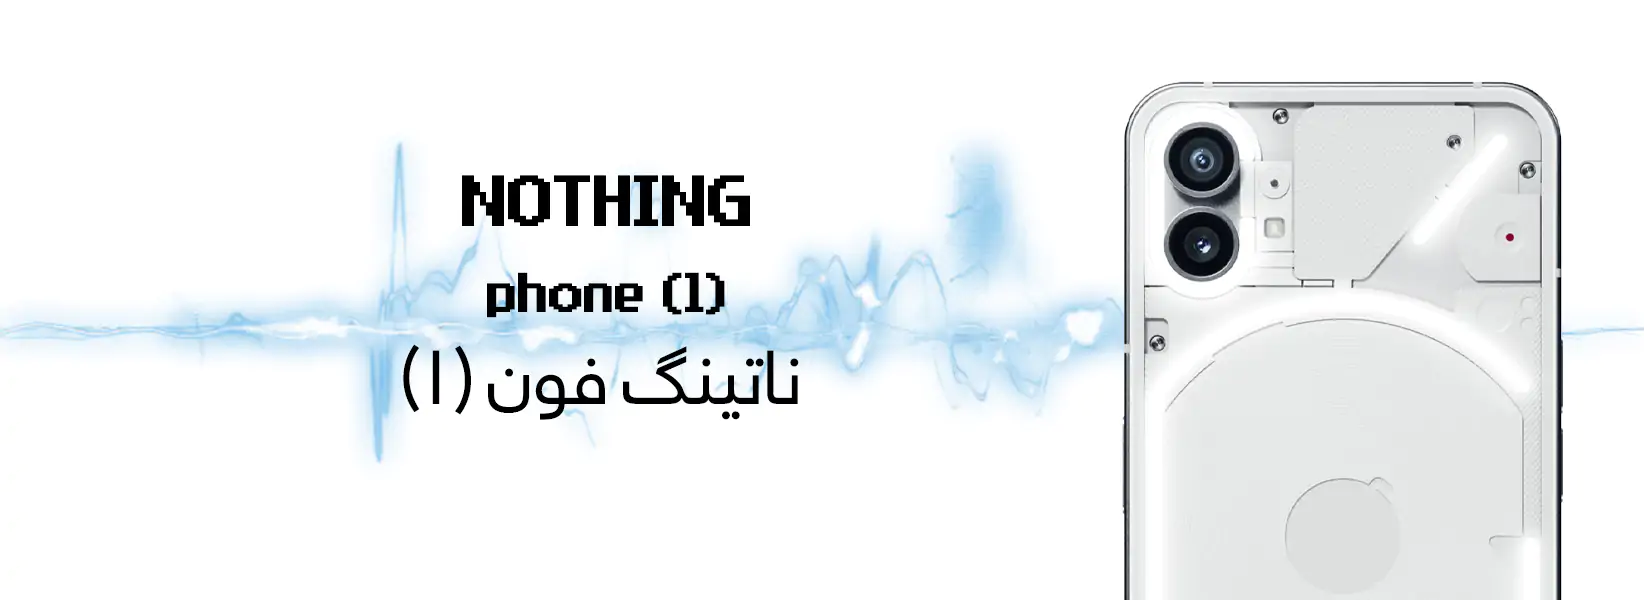 Nothing phone 1